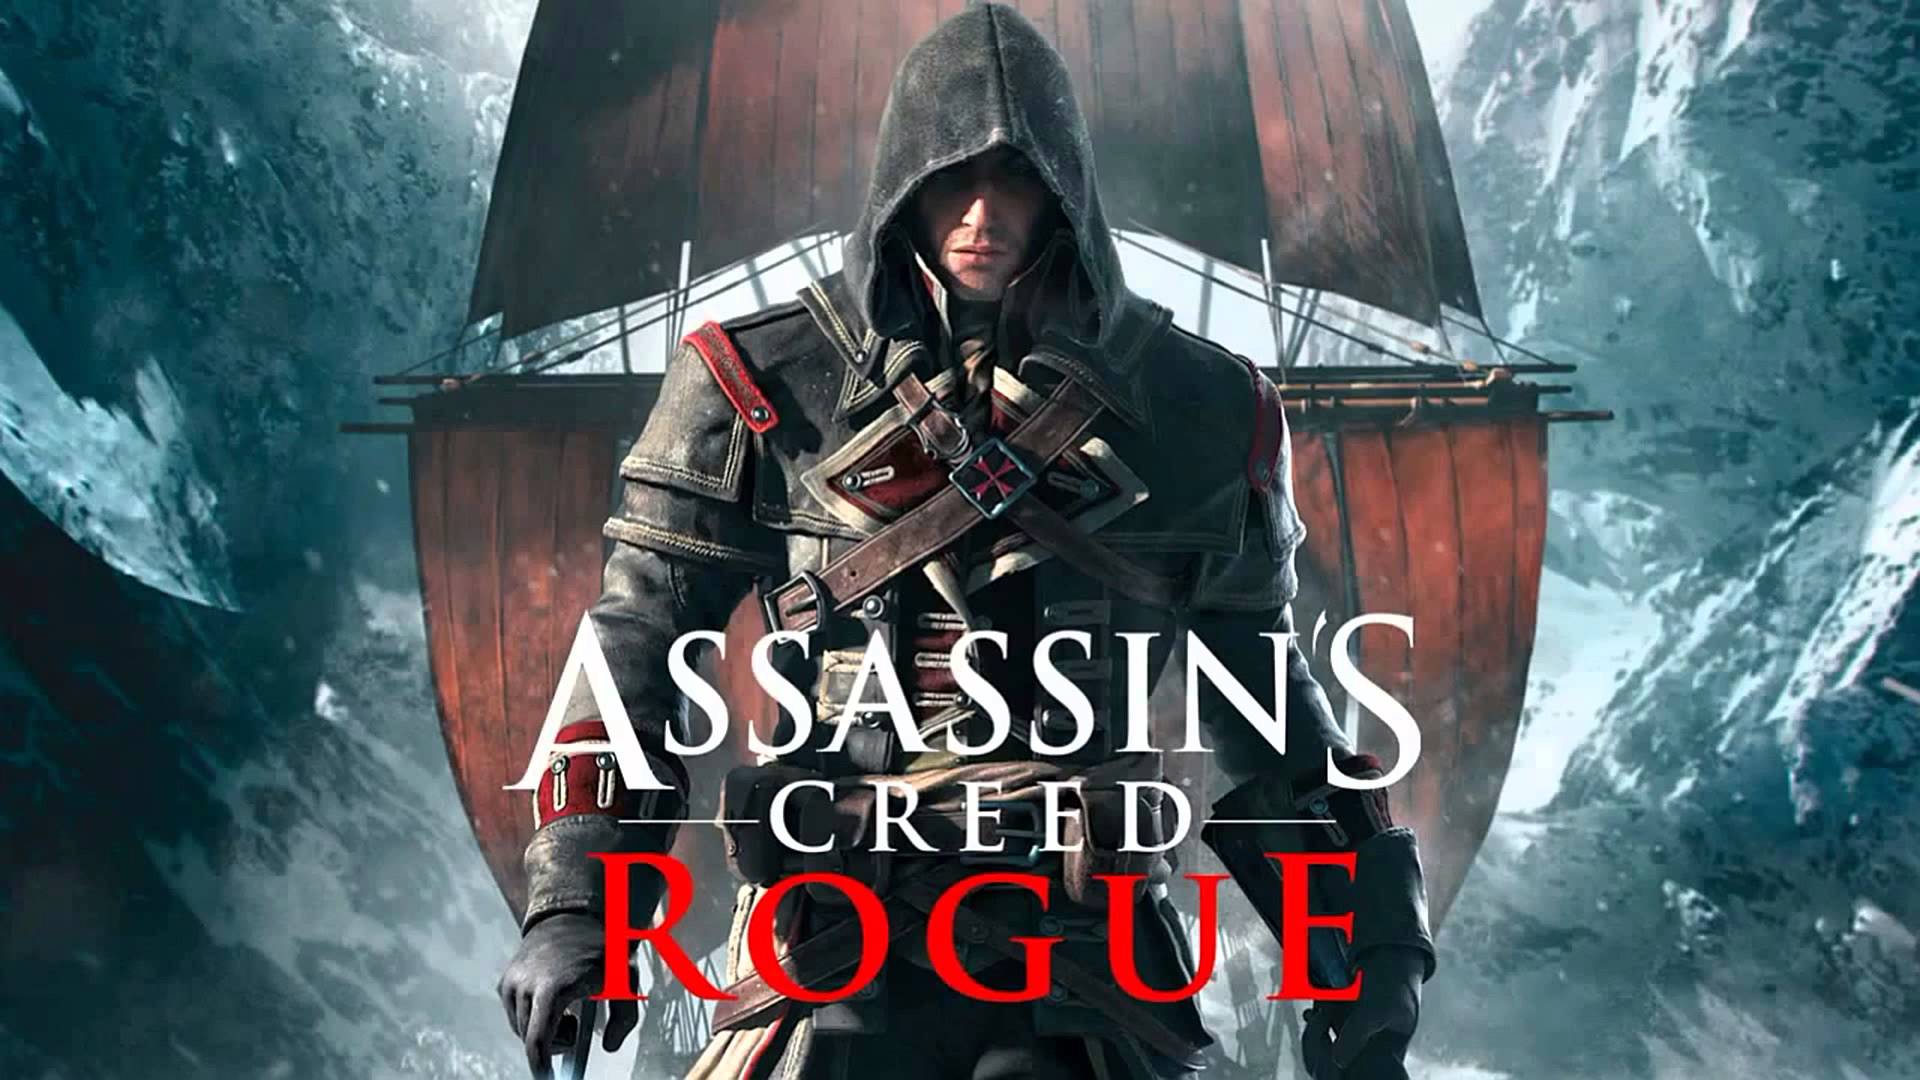 Assassin's Creed Rogue Wallpaper HD. Assassins creed wallpaper